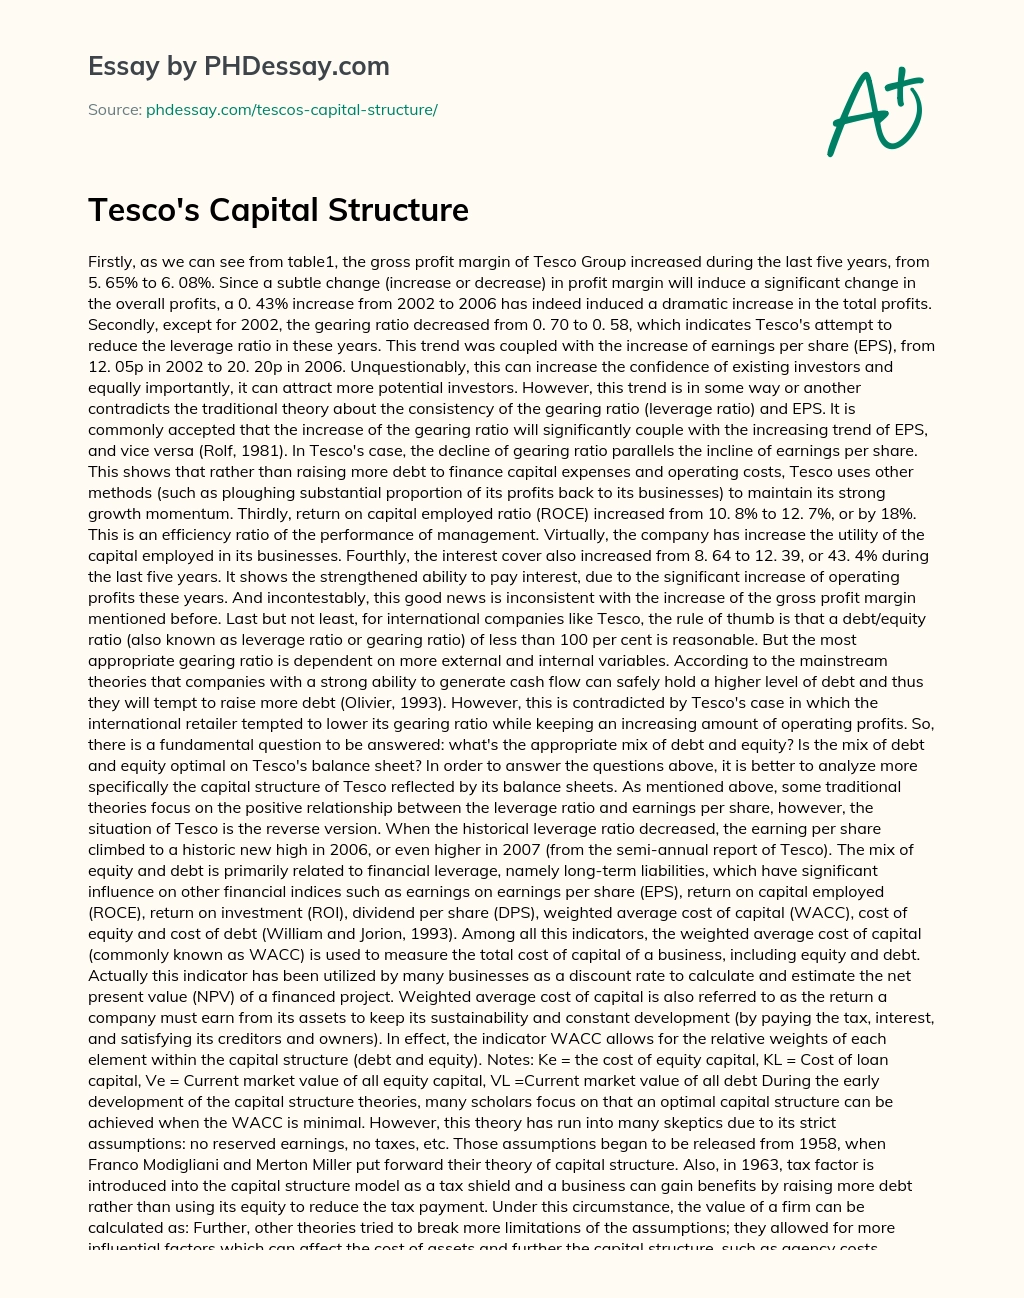 Tesco’s Capital Structure essay